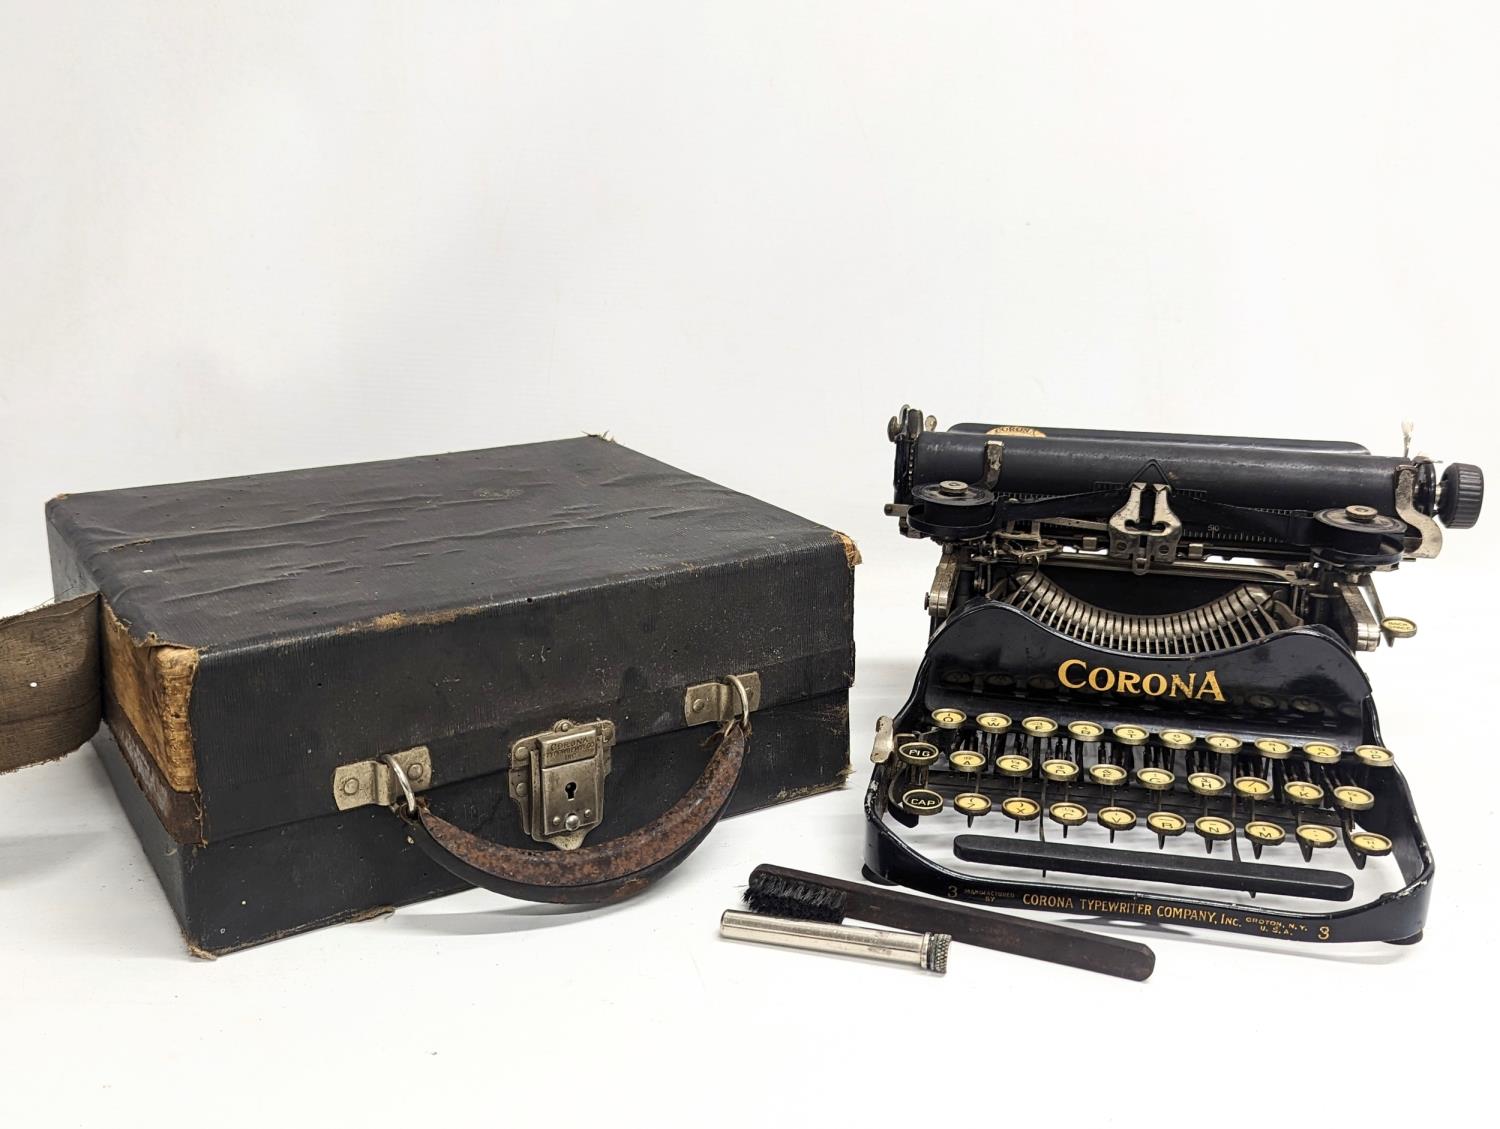 An early 20th century miniature Corona typewriter, dated 1917.